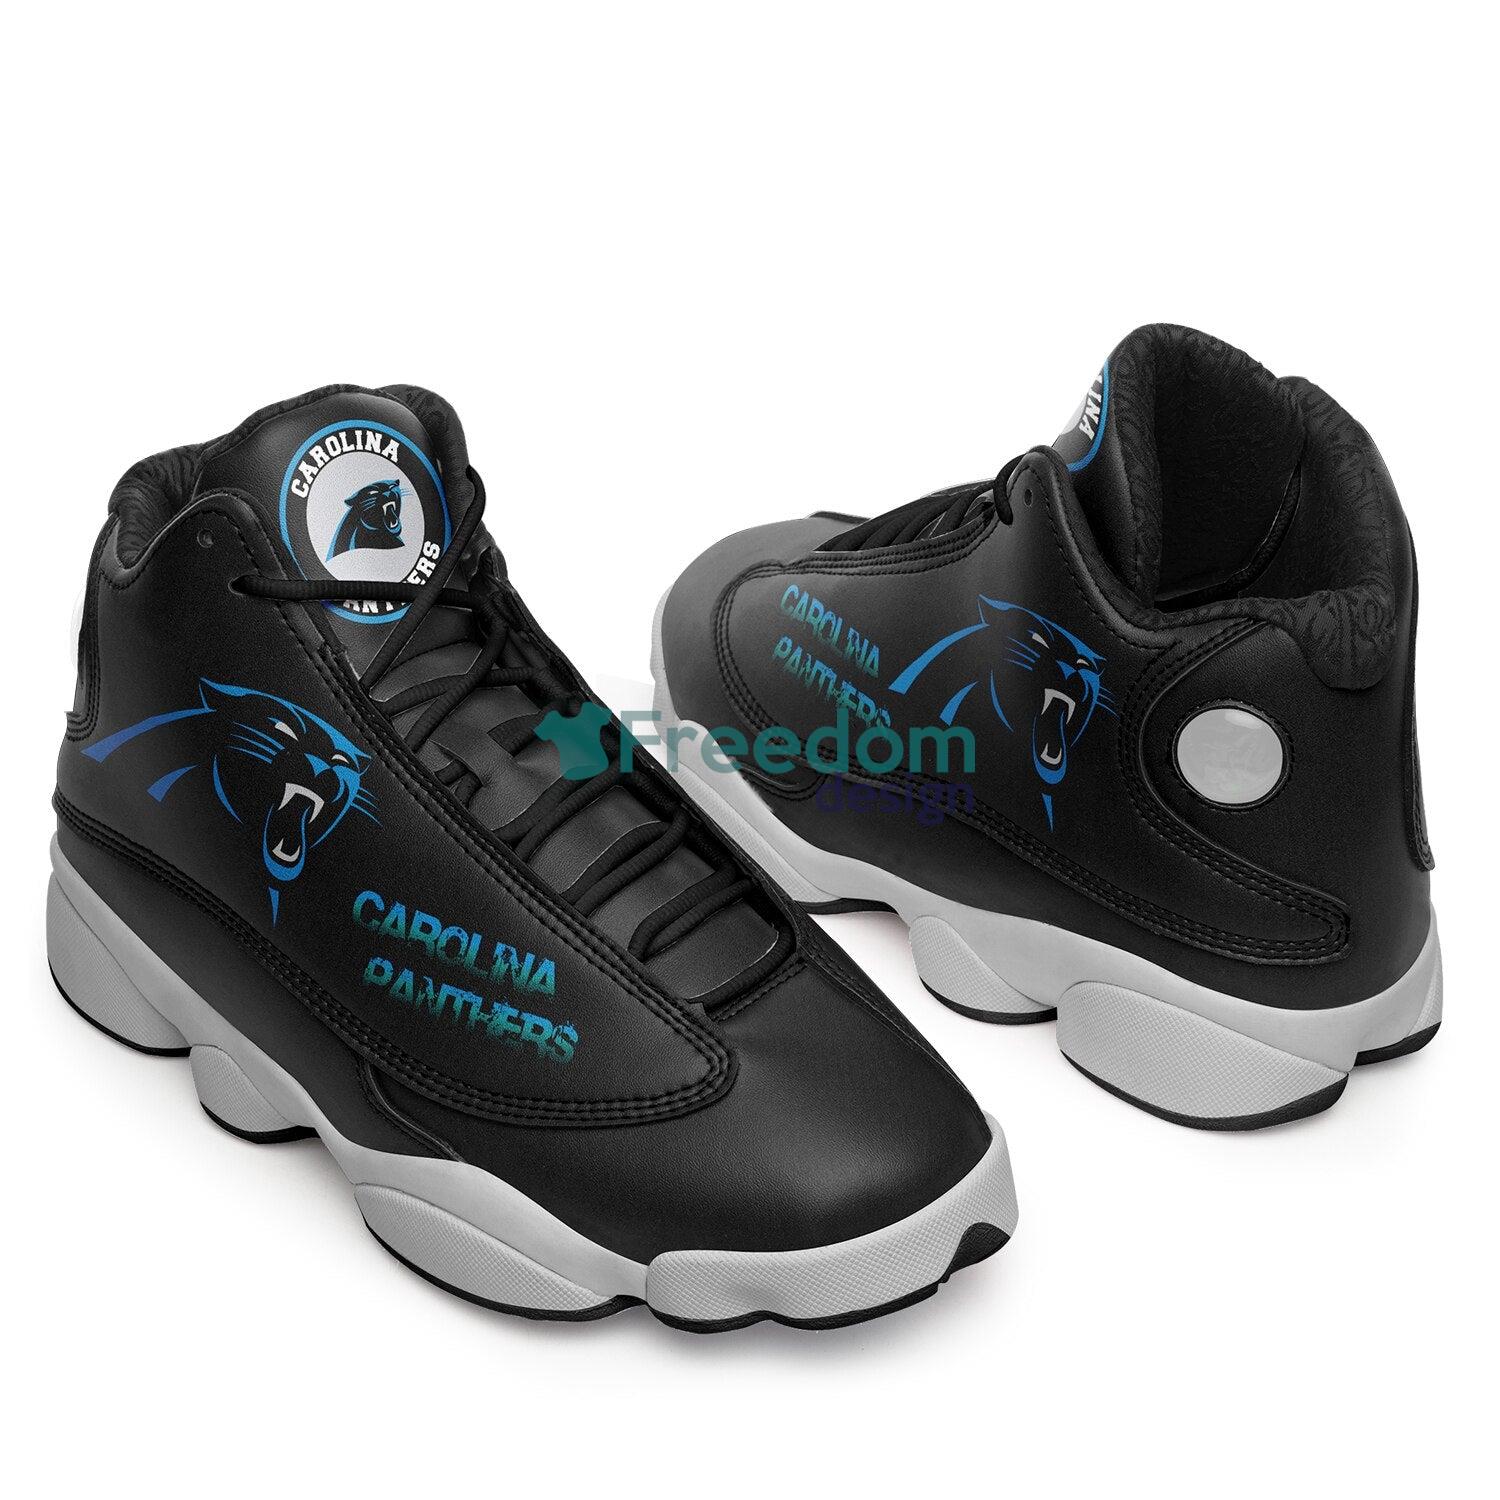 Carolina Panthers Team Air Jordan 13 Sneaker Shoes For Fans